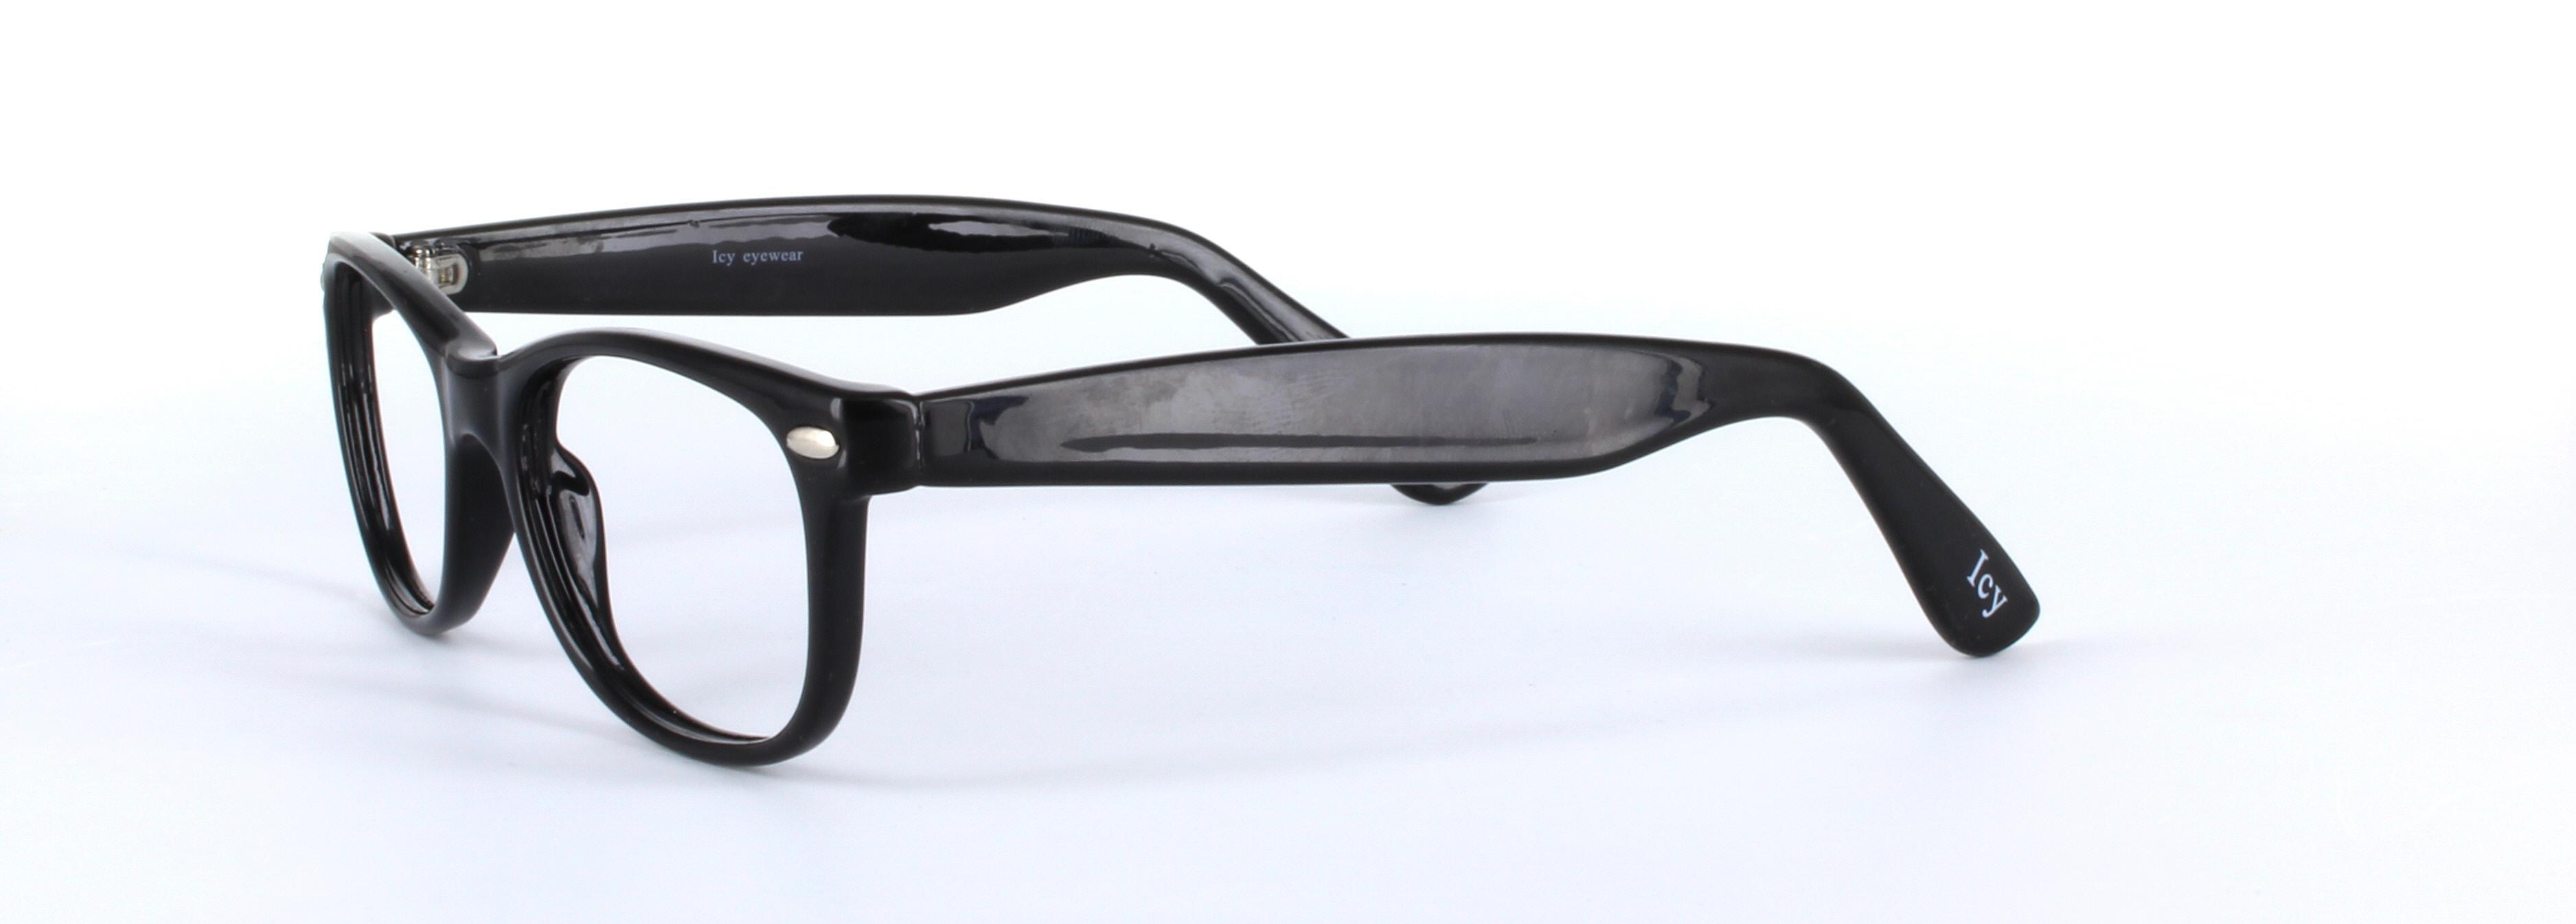 Costa Rica Black Full Rim Oval Plastic Glasses  - Image View 2